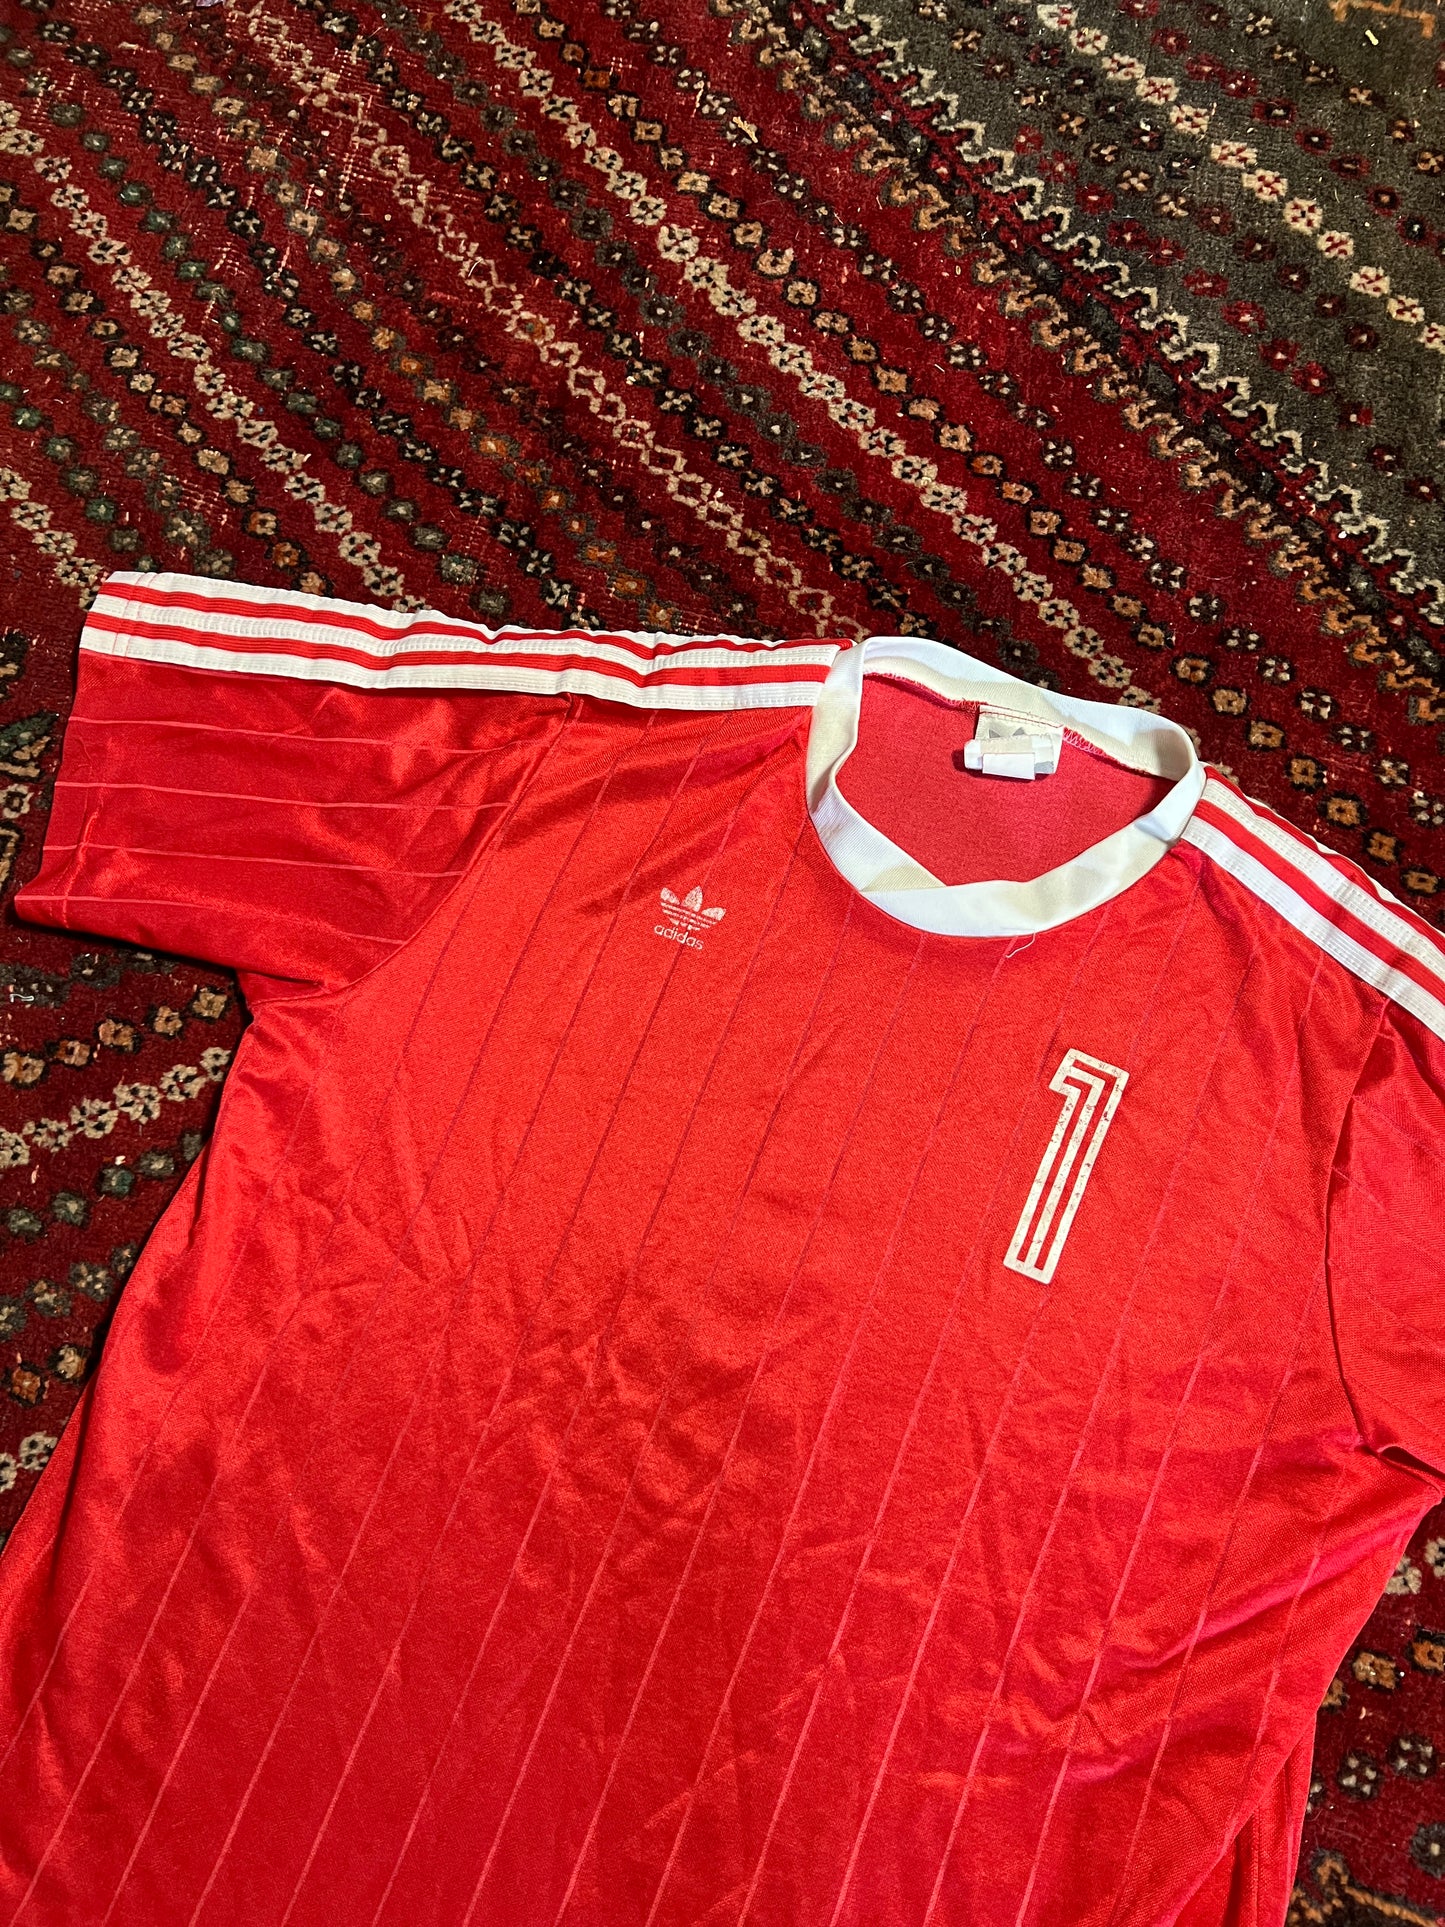 Adidas Soccer Jersey